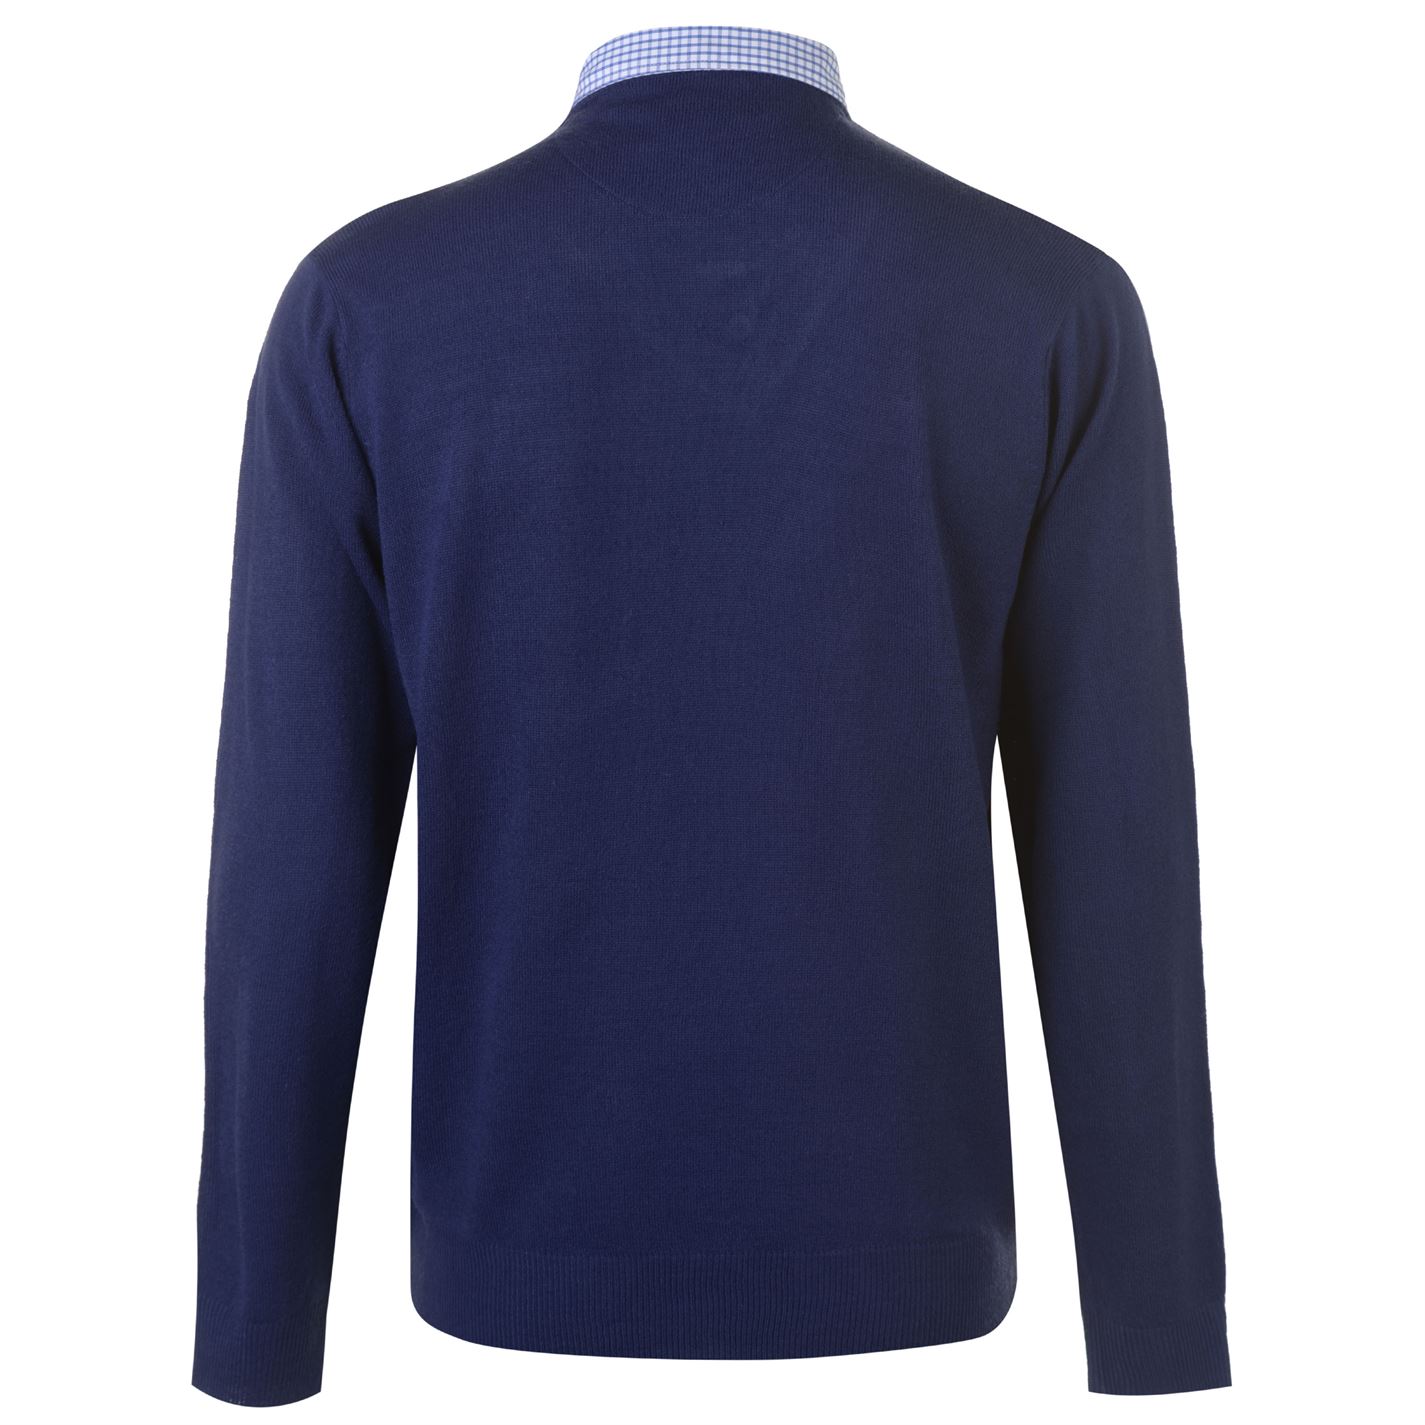 Pierre Cardin Mens Mock V Neck Knit Jumper Sweater Pullover Long Sleeve ...